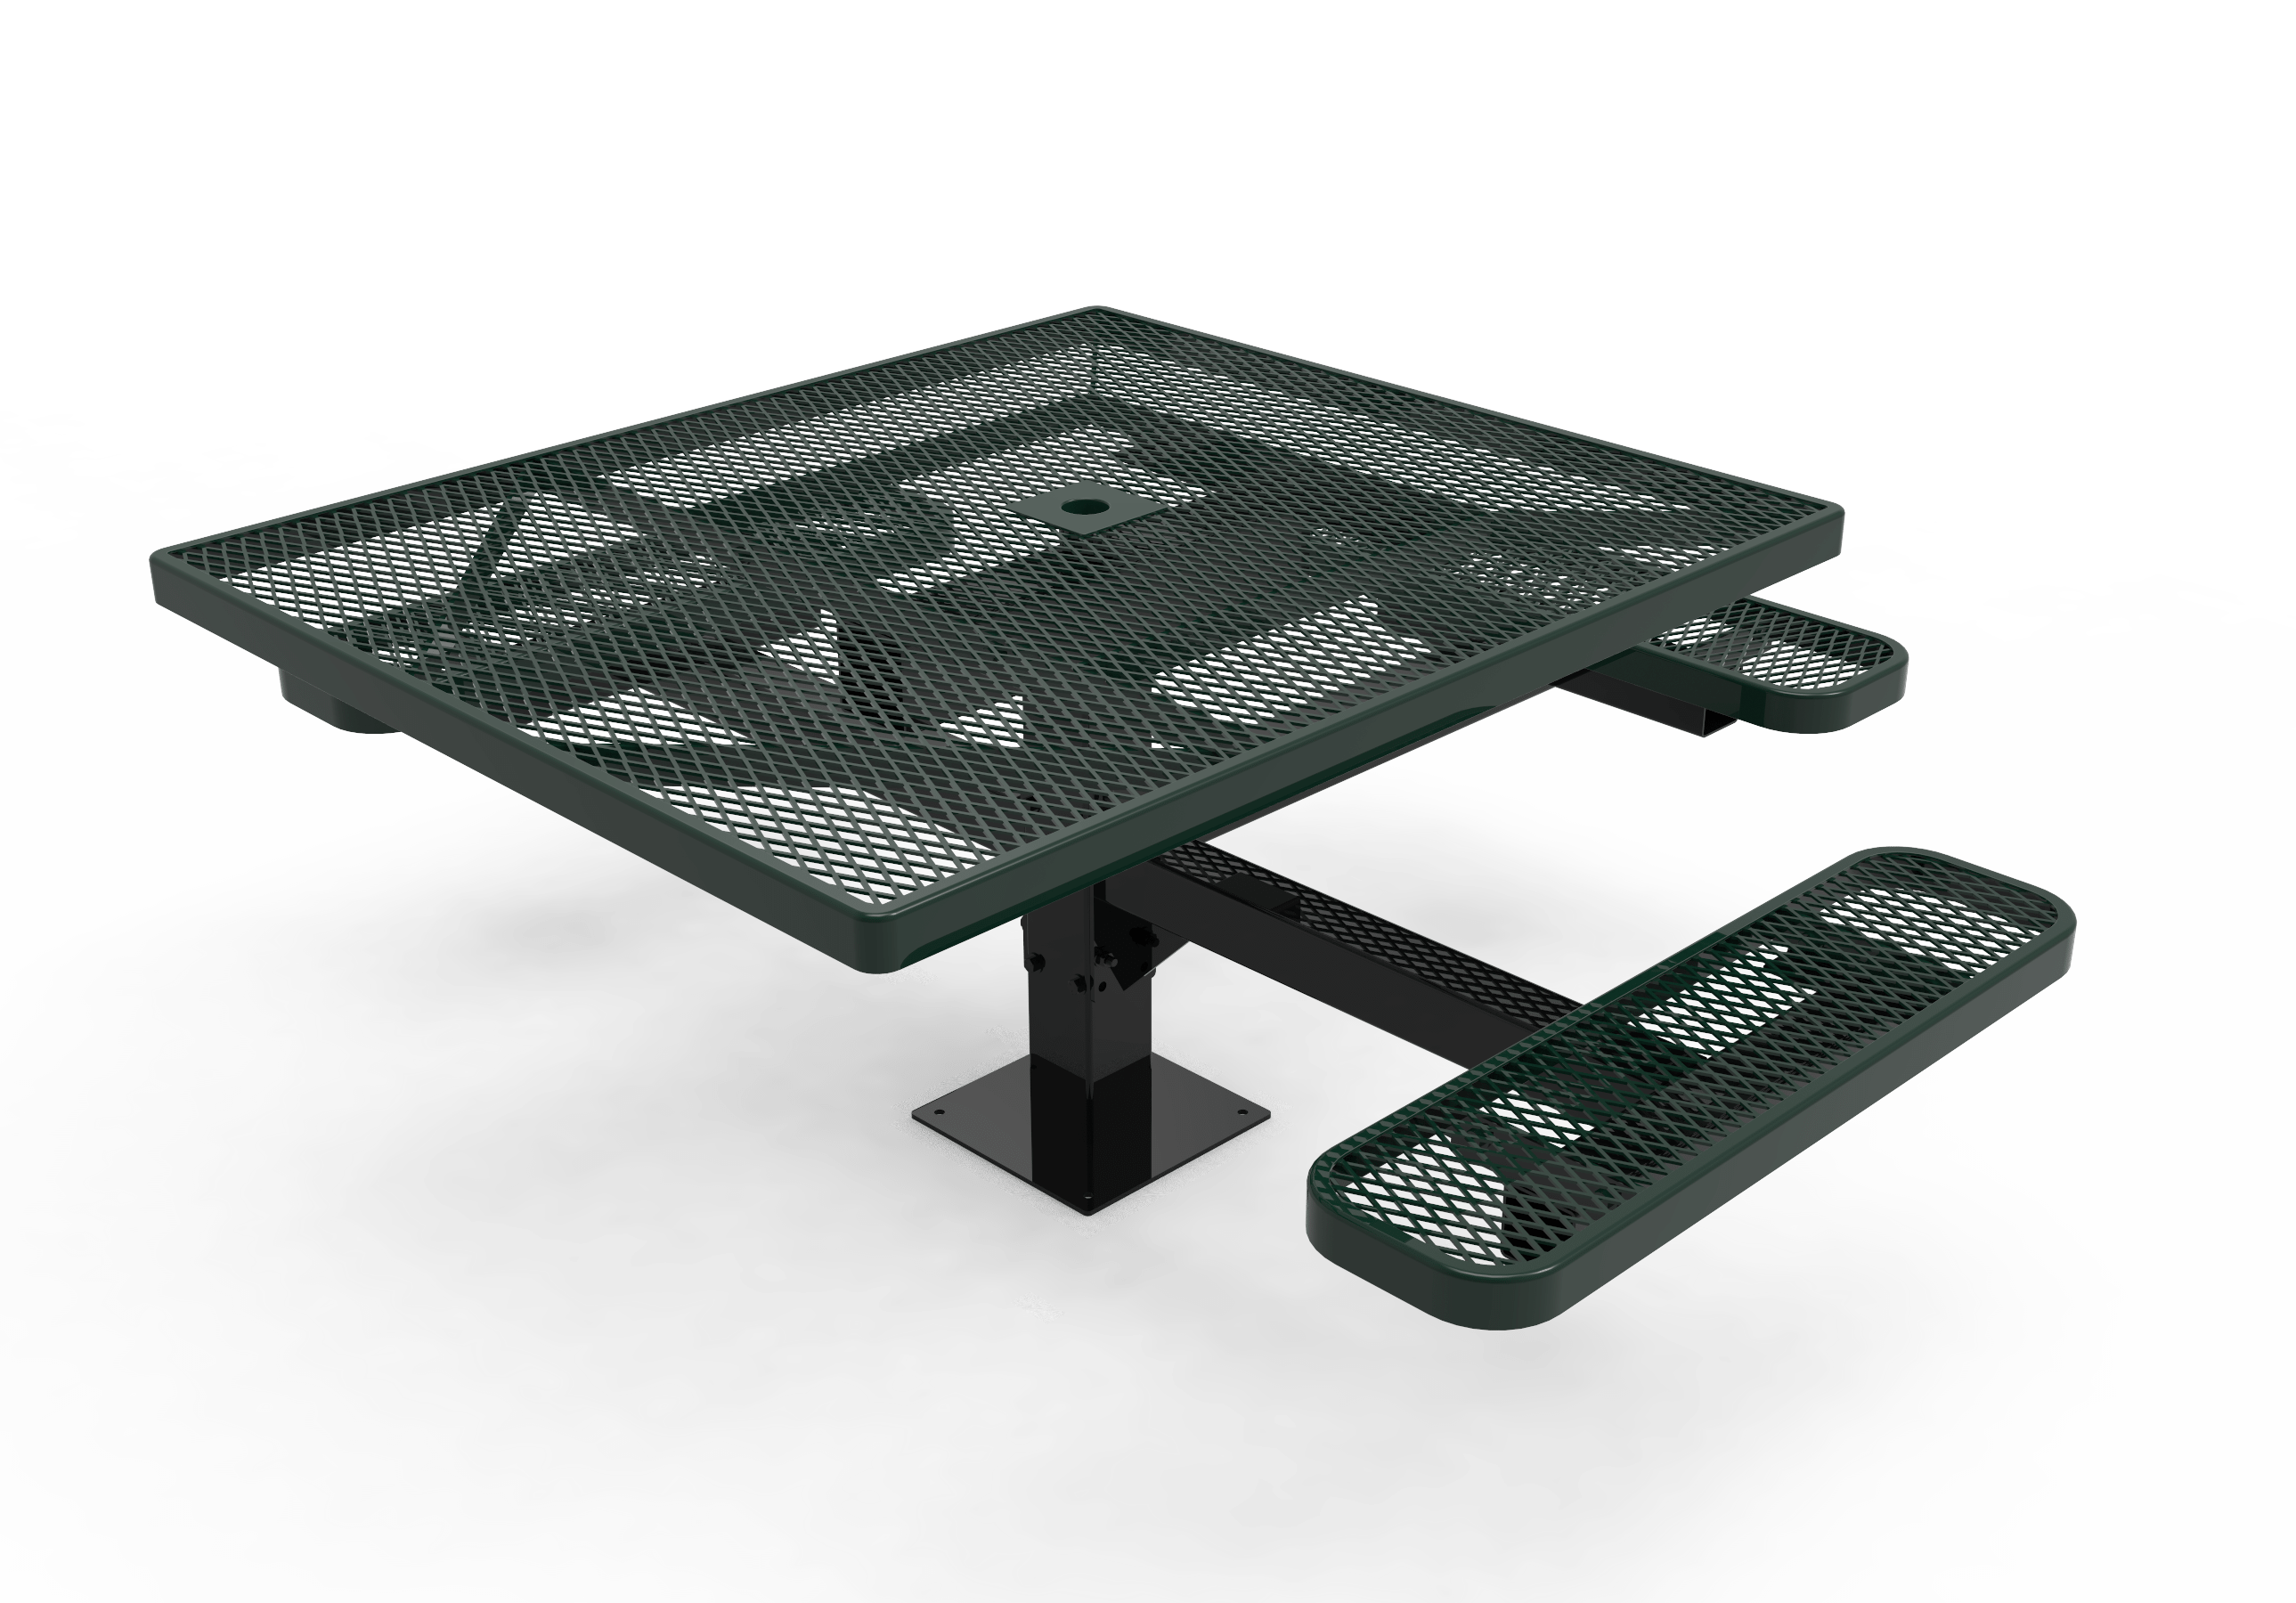 46″ Square Top Pedestal Surface Table 3 Seat-Mesh
TSQ46-C-15-013
Industry Standard Finish
$1279.00
TSQ46-A-15-013
Advantage Premium Finish
$1579.00
